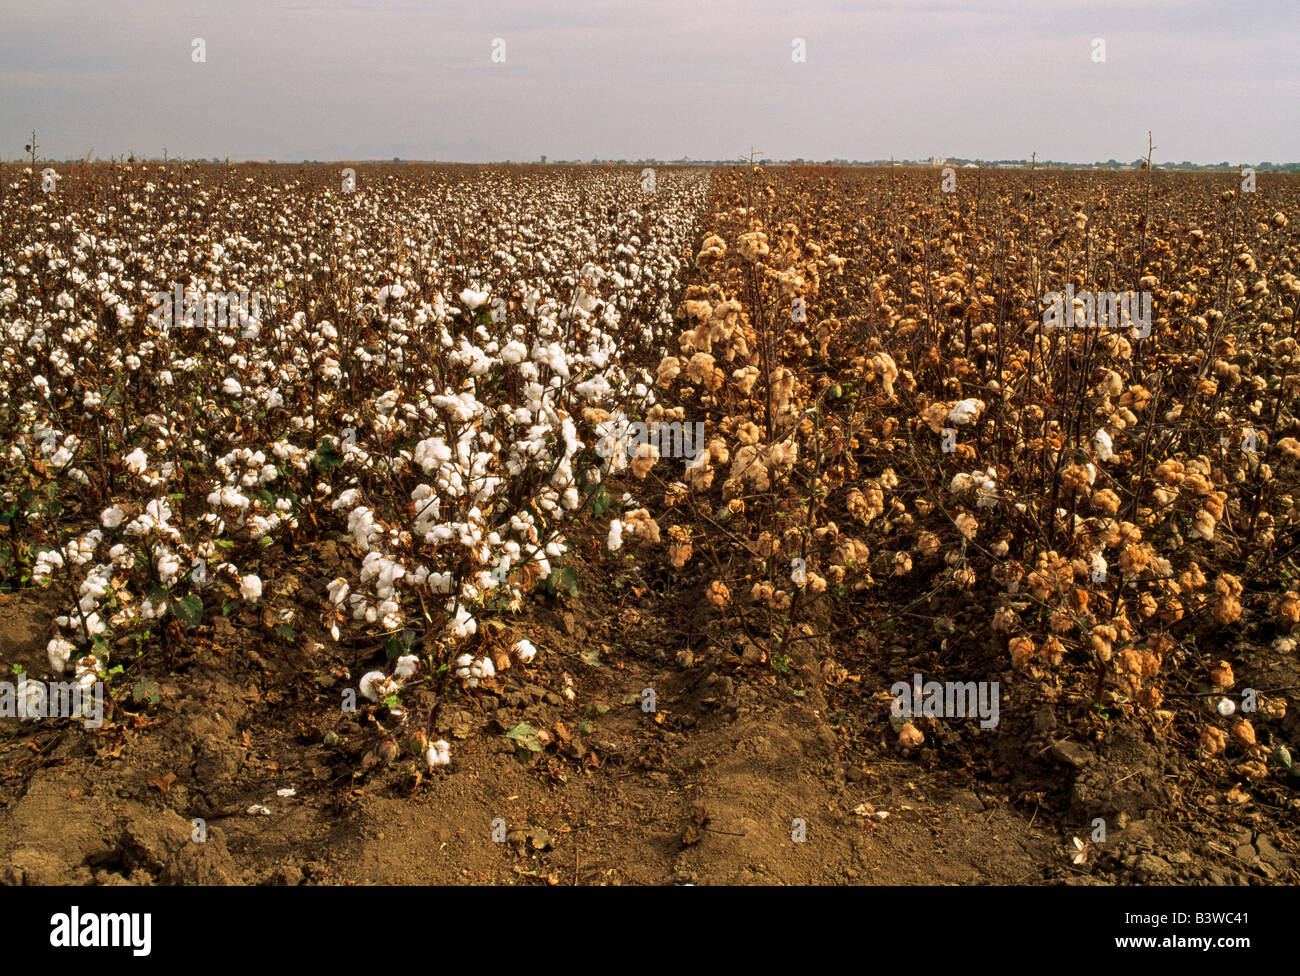 White & beige cotton growing in field. Stock Photo